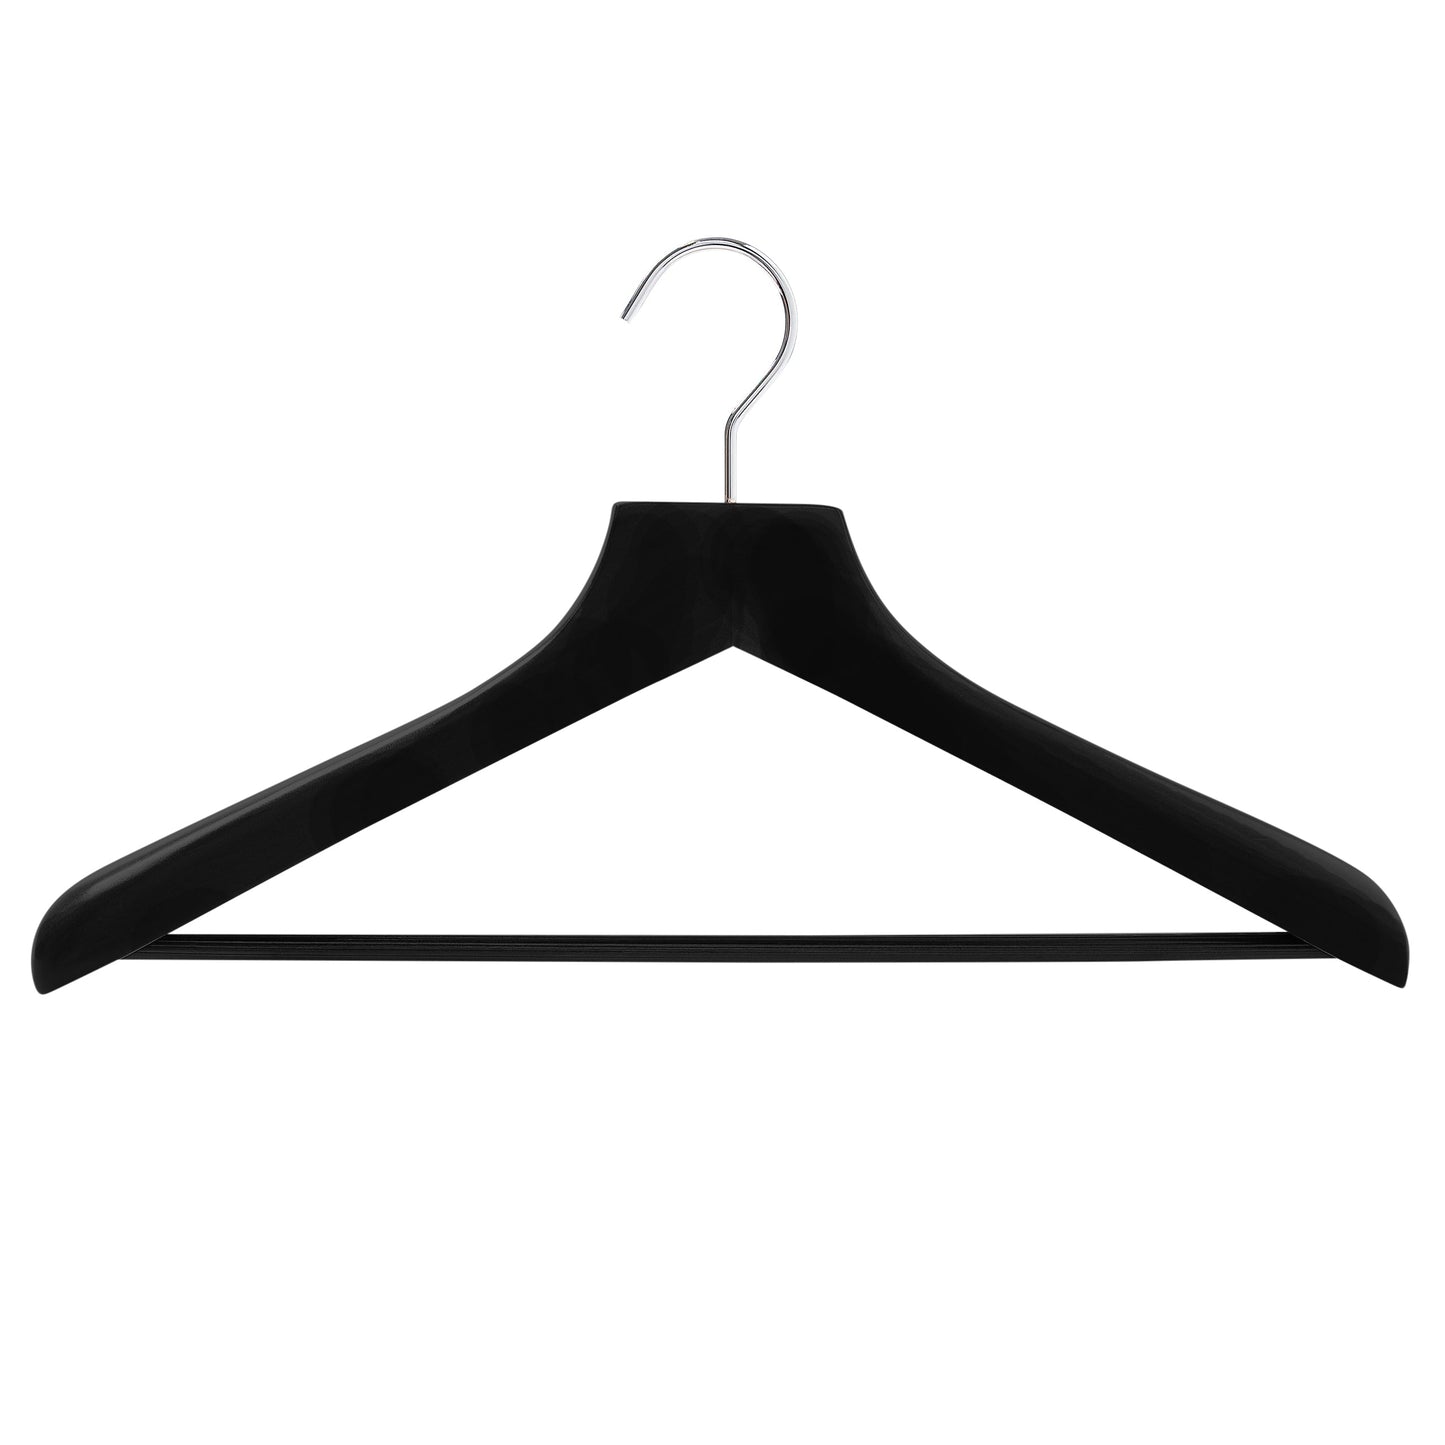 46cm Premium Black Wooden Suit Hanger With Bar 50mm Thick Shoulders Sold 5/10/20 - Rackshop Australia